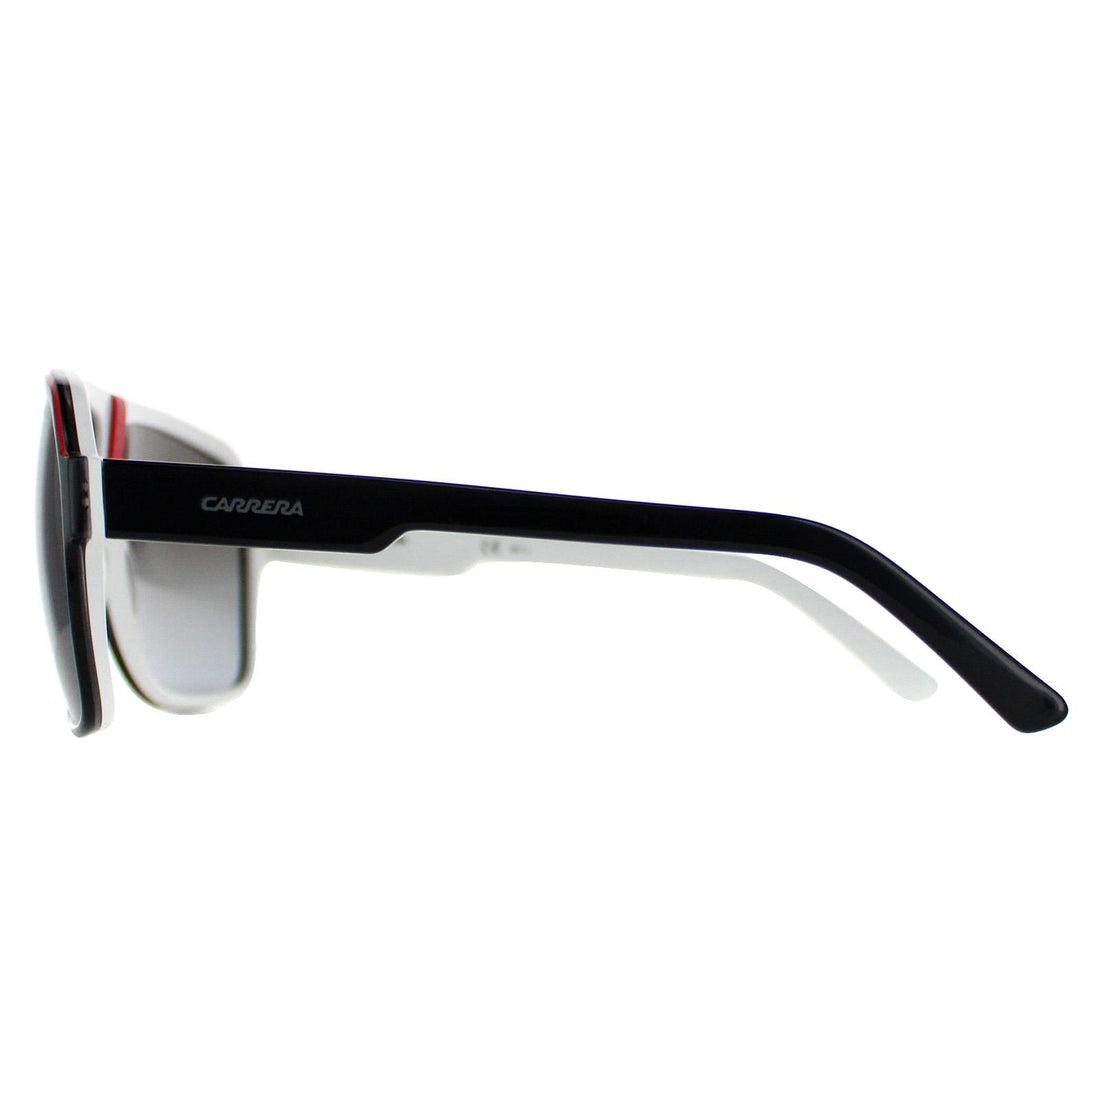 Carrera Sunglasses Carrera 33 8V4 PT Black & White Black Gradient